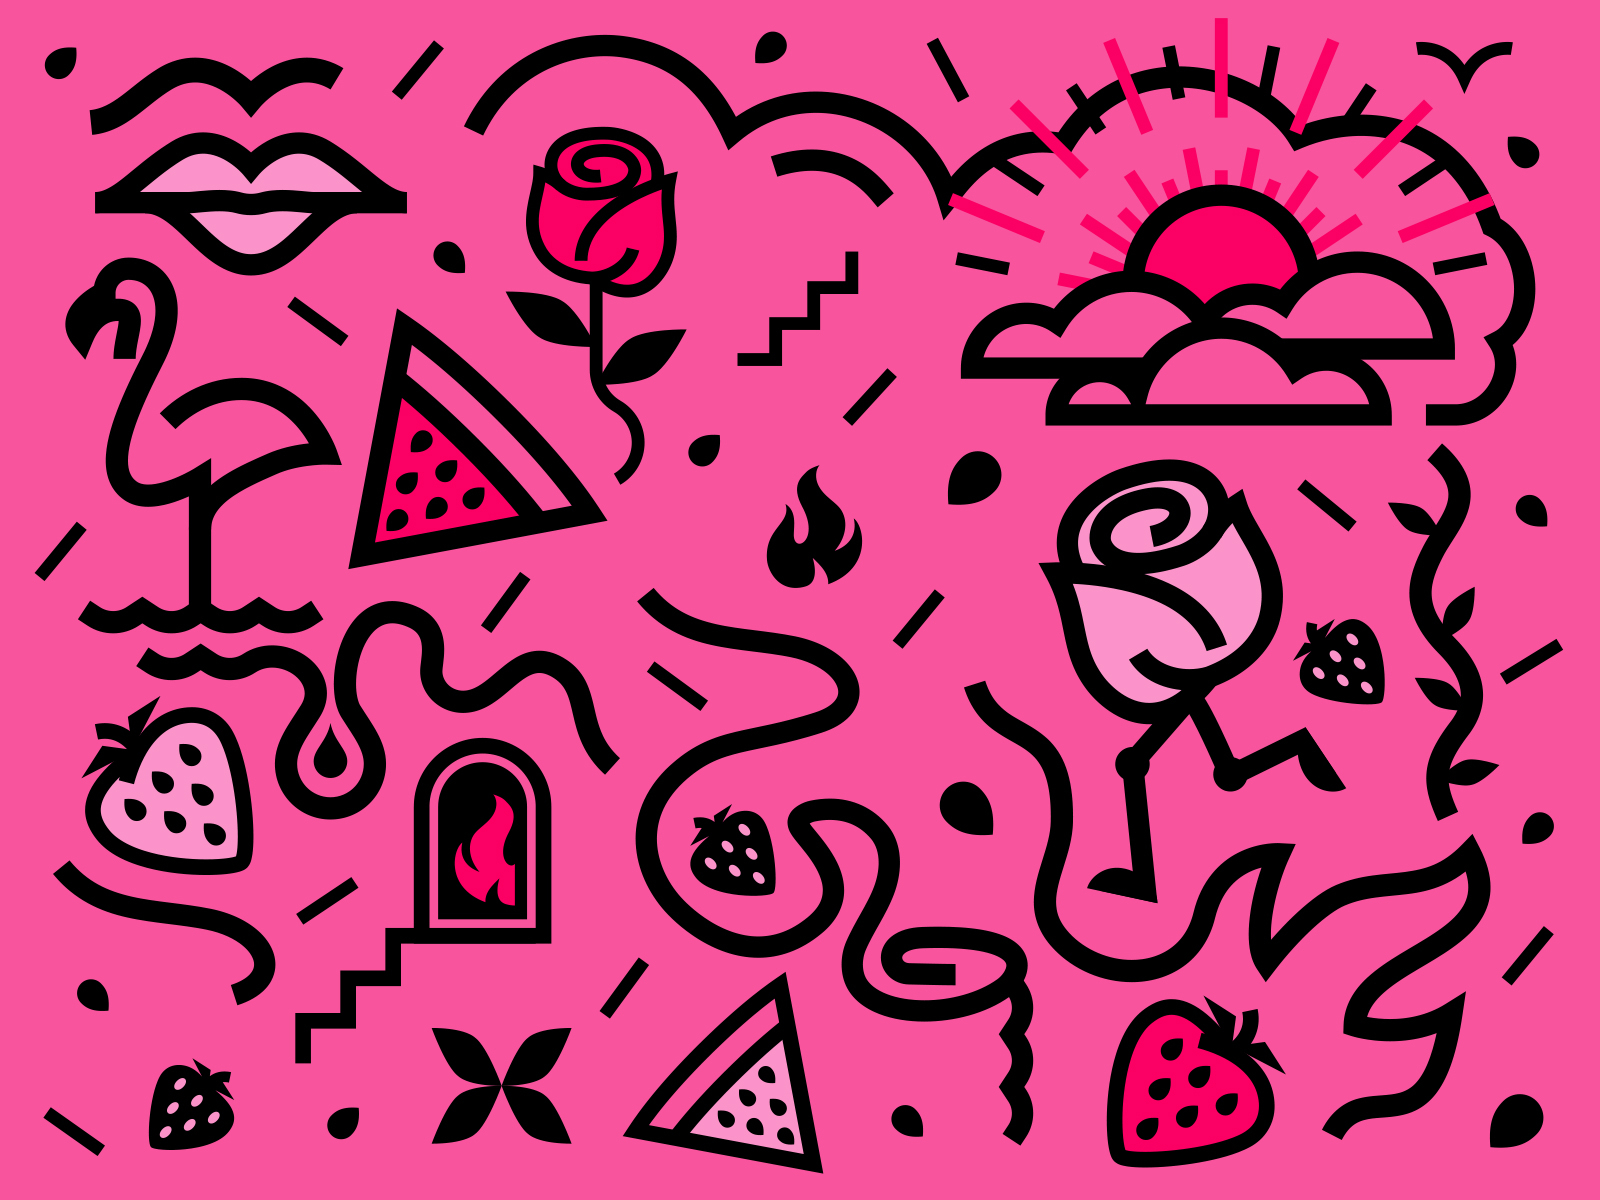 Hot Pink design flamingo icons illustration monoweight pattern pink rose vector